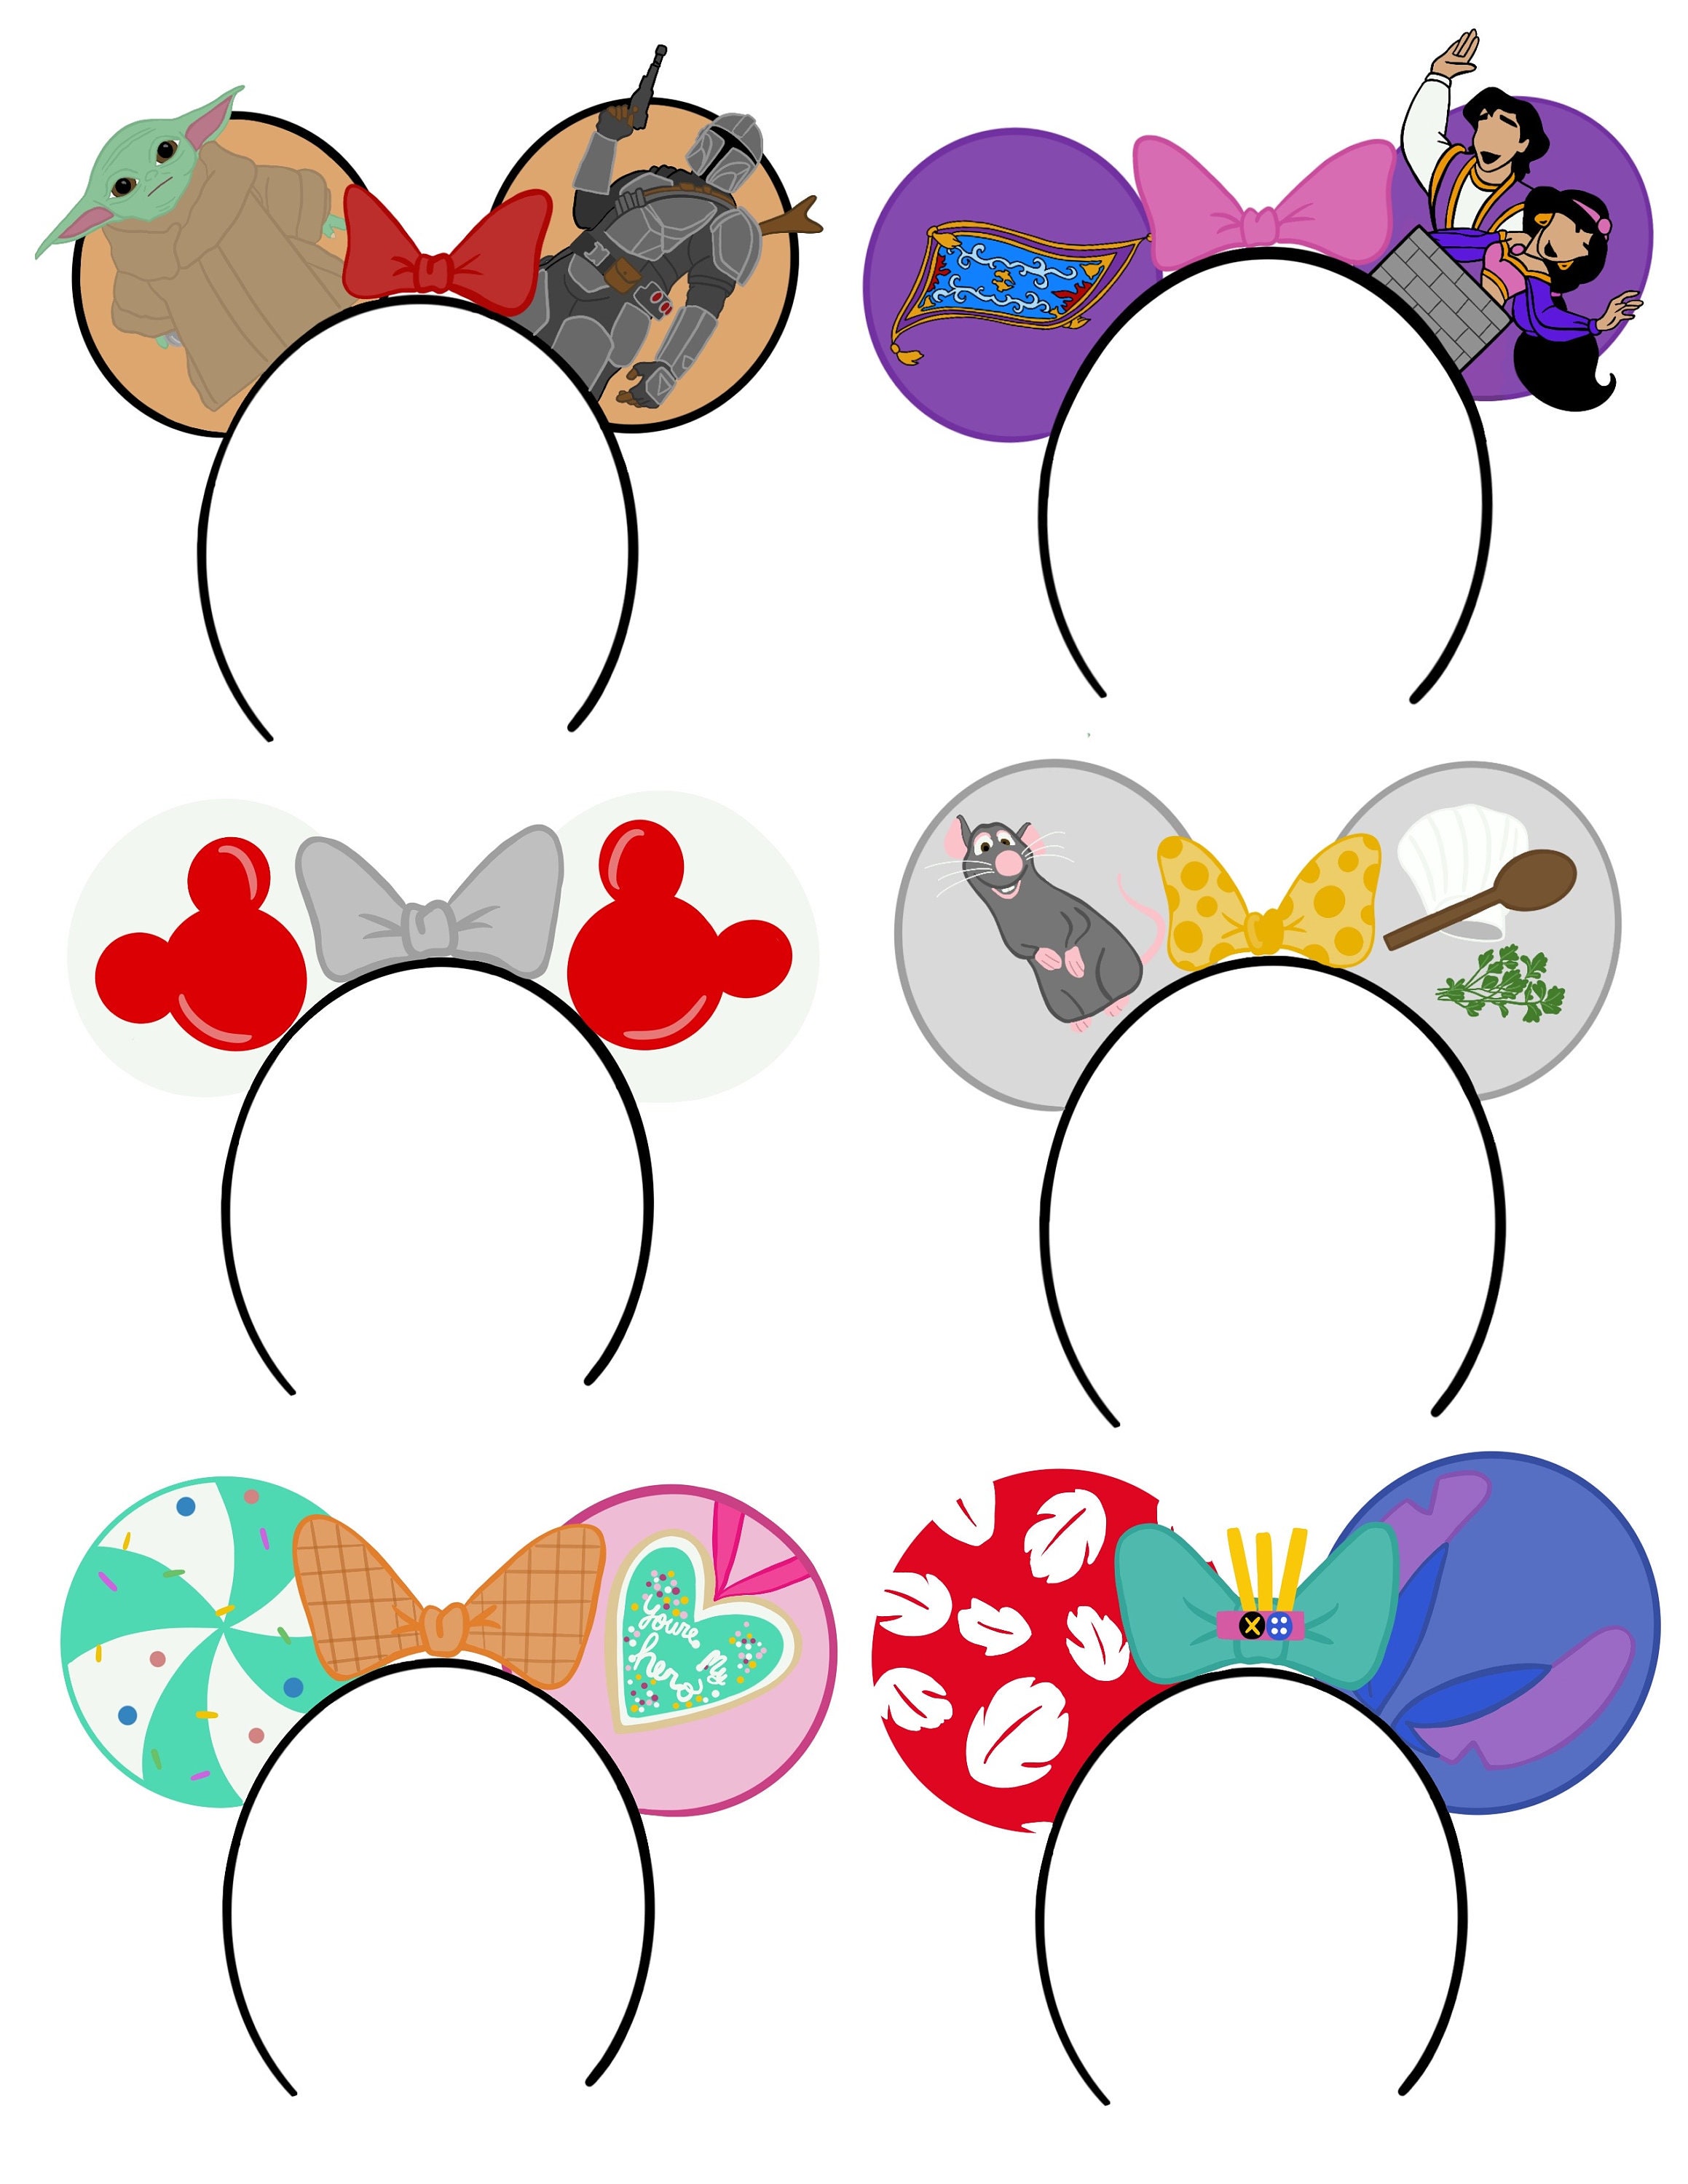 Autocollants Disney Mickey &Minnie Mouse Disney Autocollants vinyles  imperméables Feuille dautocollants -  France